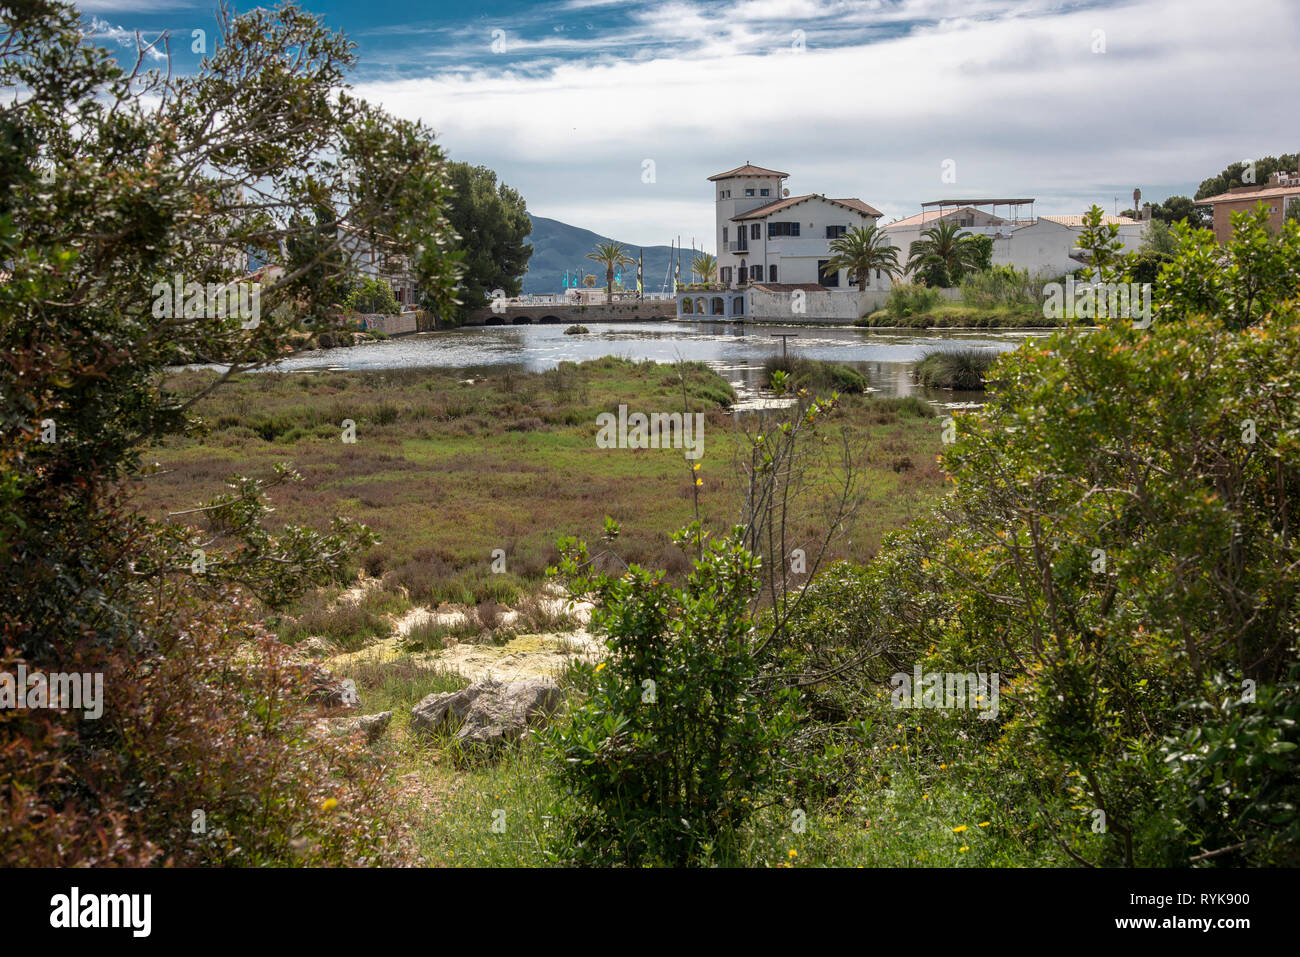 La Gola natural park,a small wetland centrally located in Puerto Pollenca town, Mojorca, Spain. Stock Photo